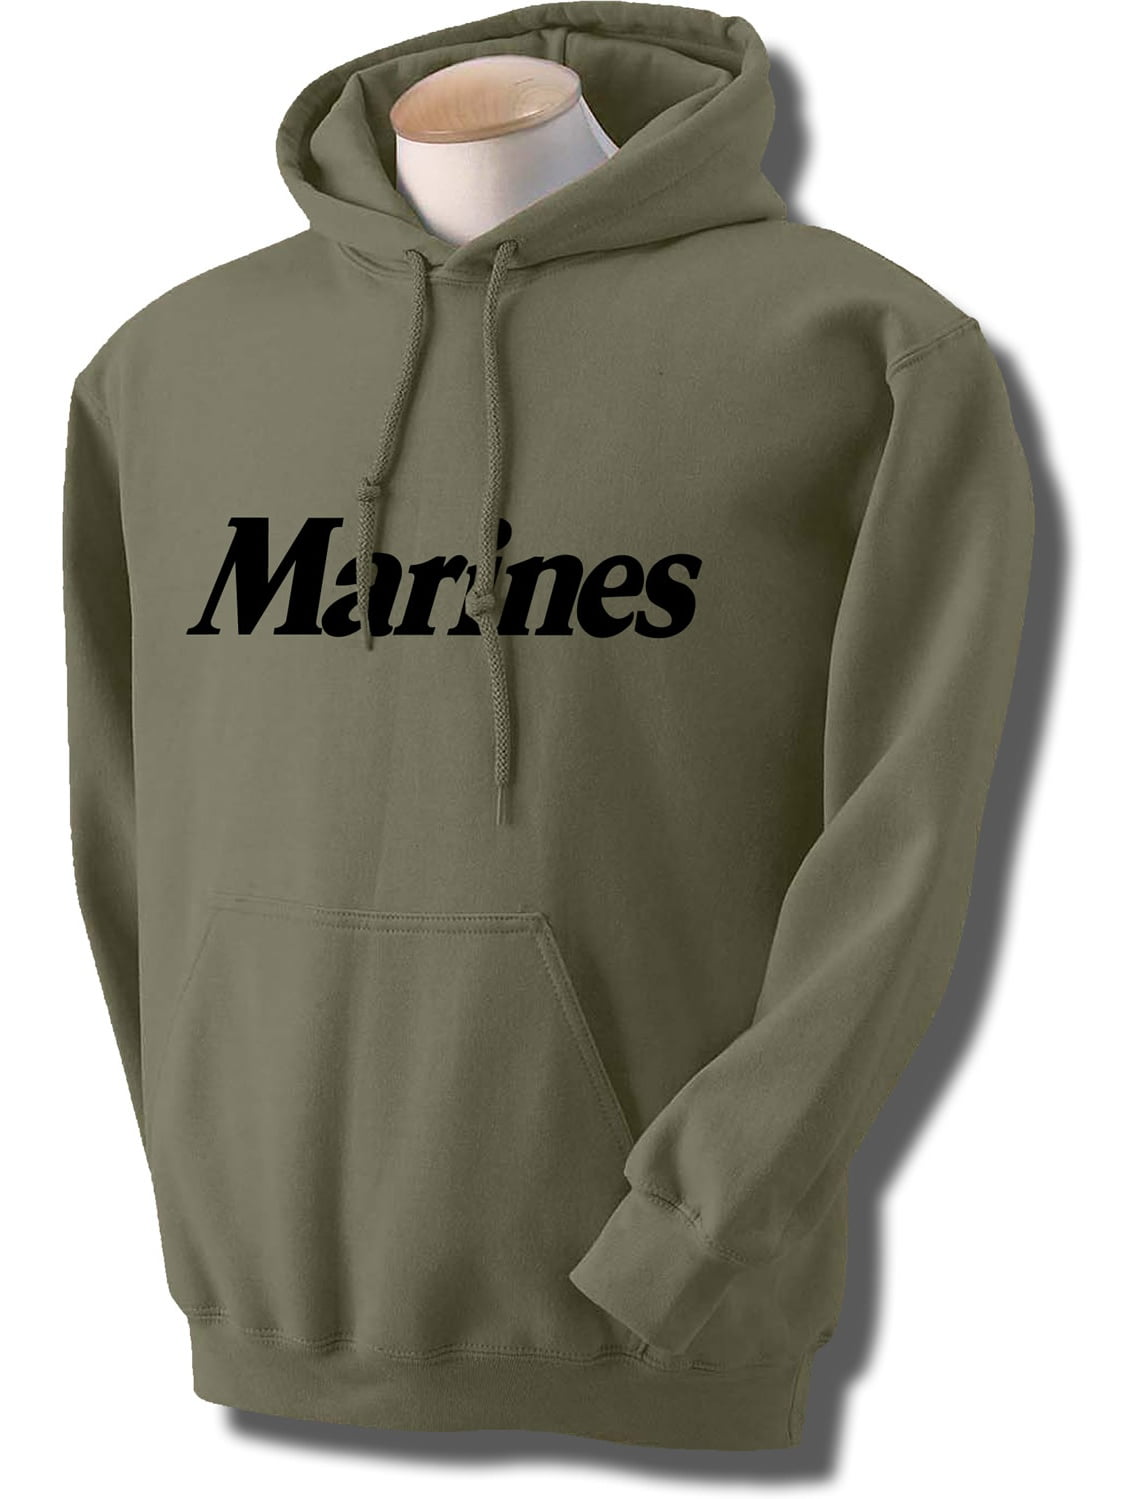 USMC Marines Military Applique Fleece Vintage Training Marine Corps Shorts L XL 